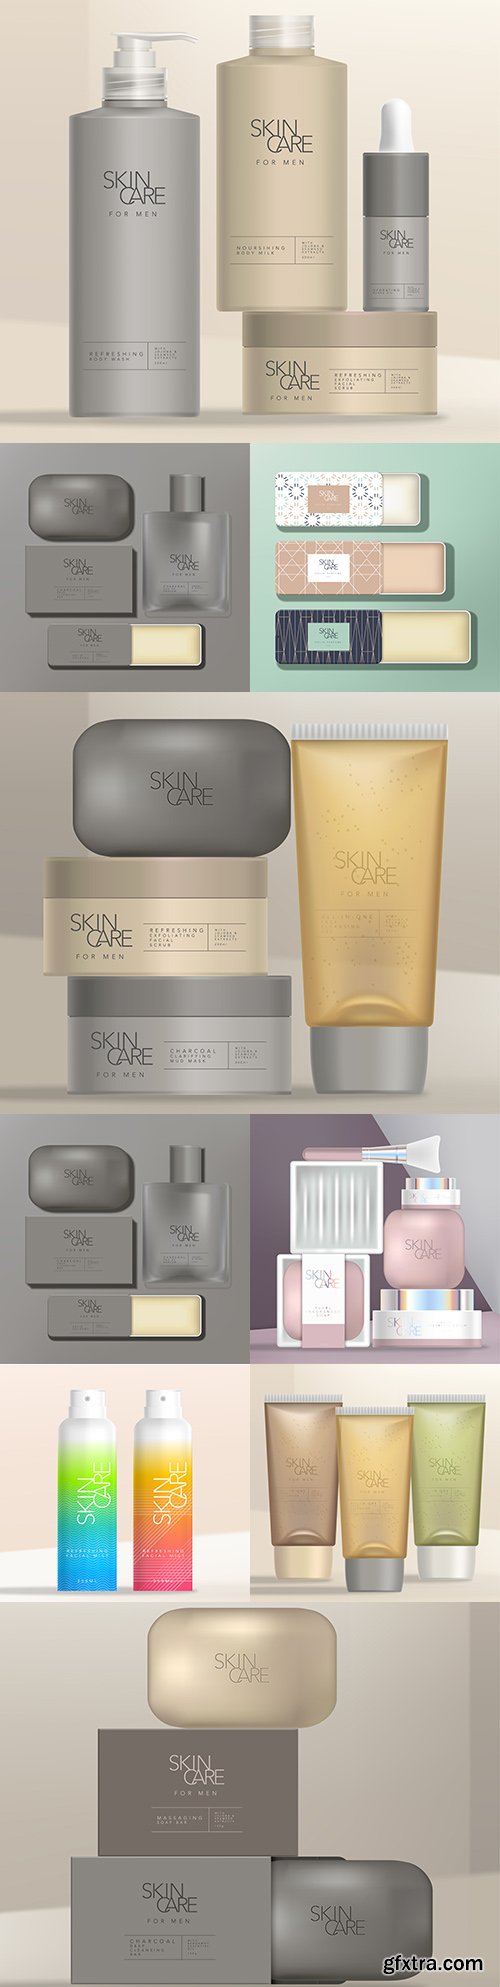 Skin care kit men\'s and women\'s toiletries design template